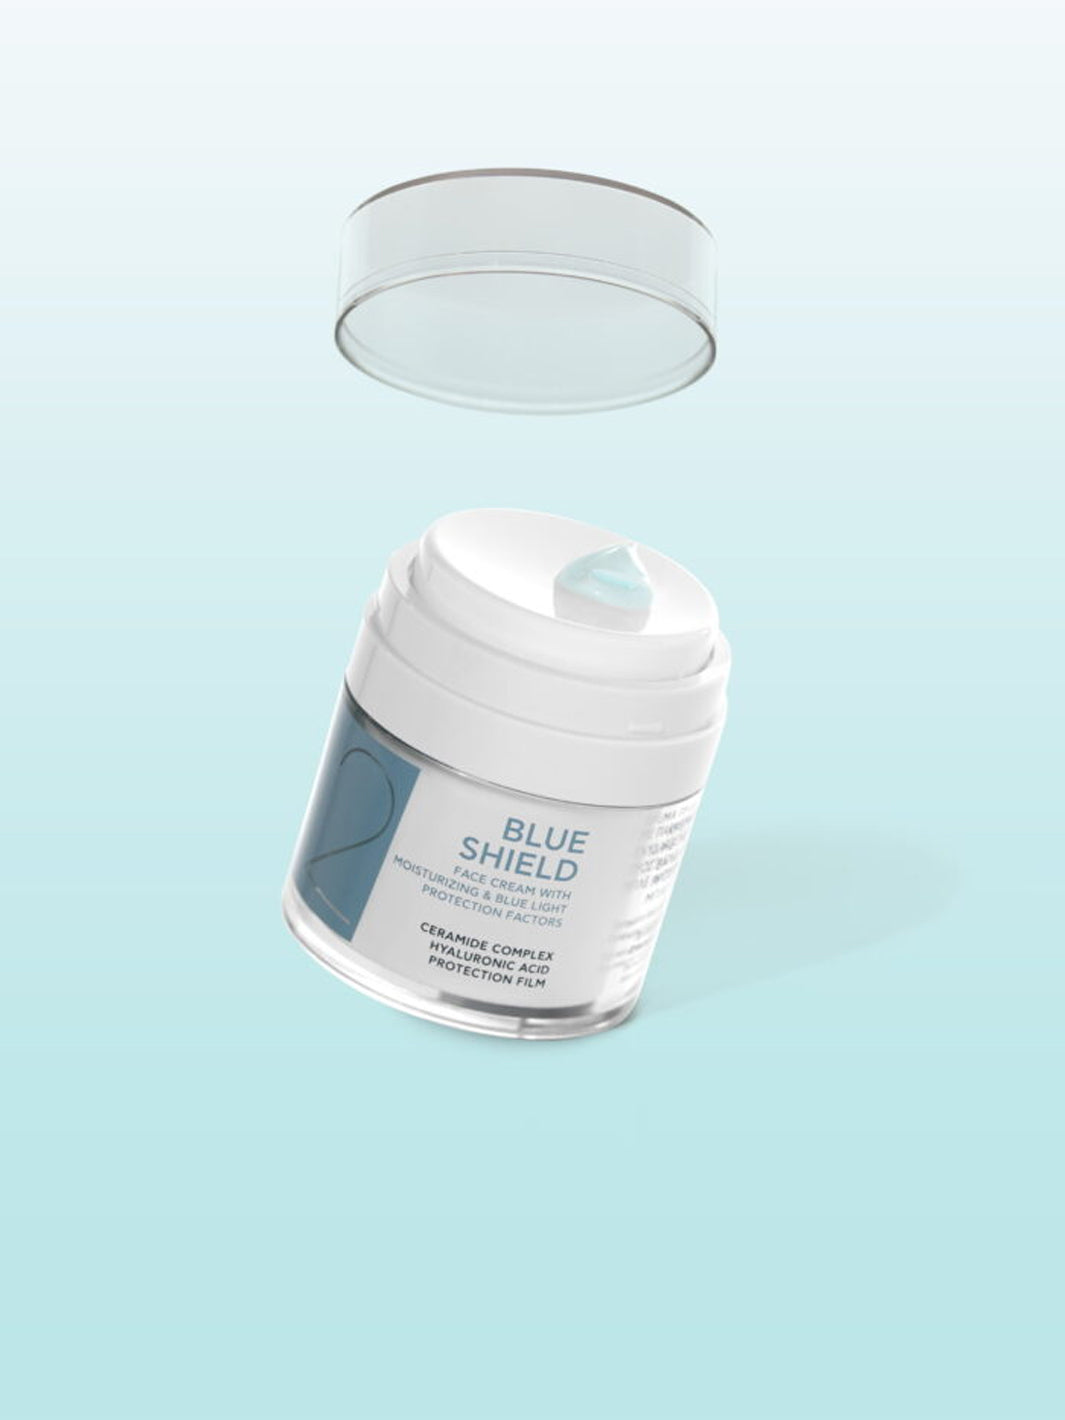 Blue Shield | Moisturizing & Protection from Blue Light Cream